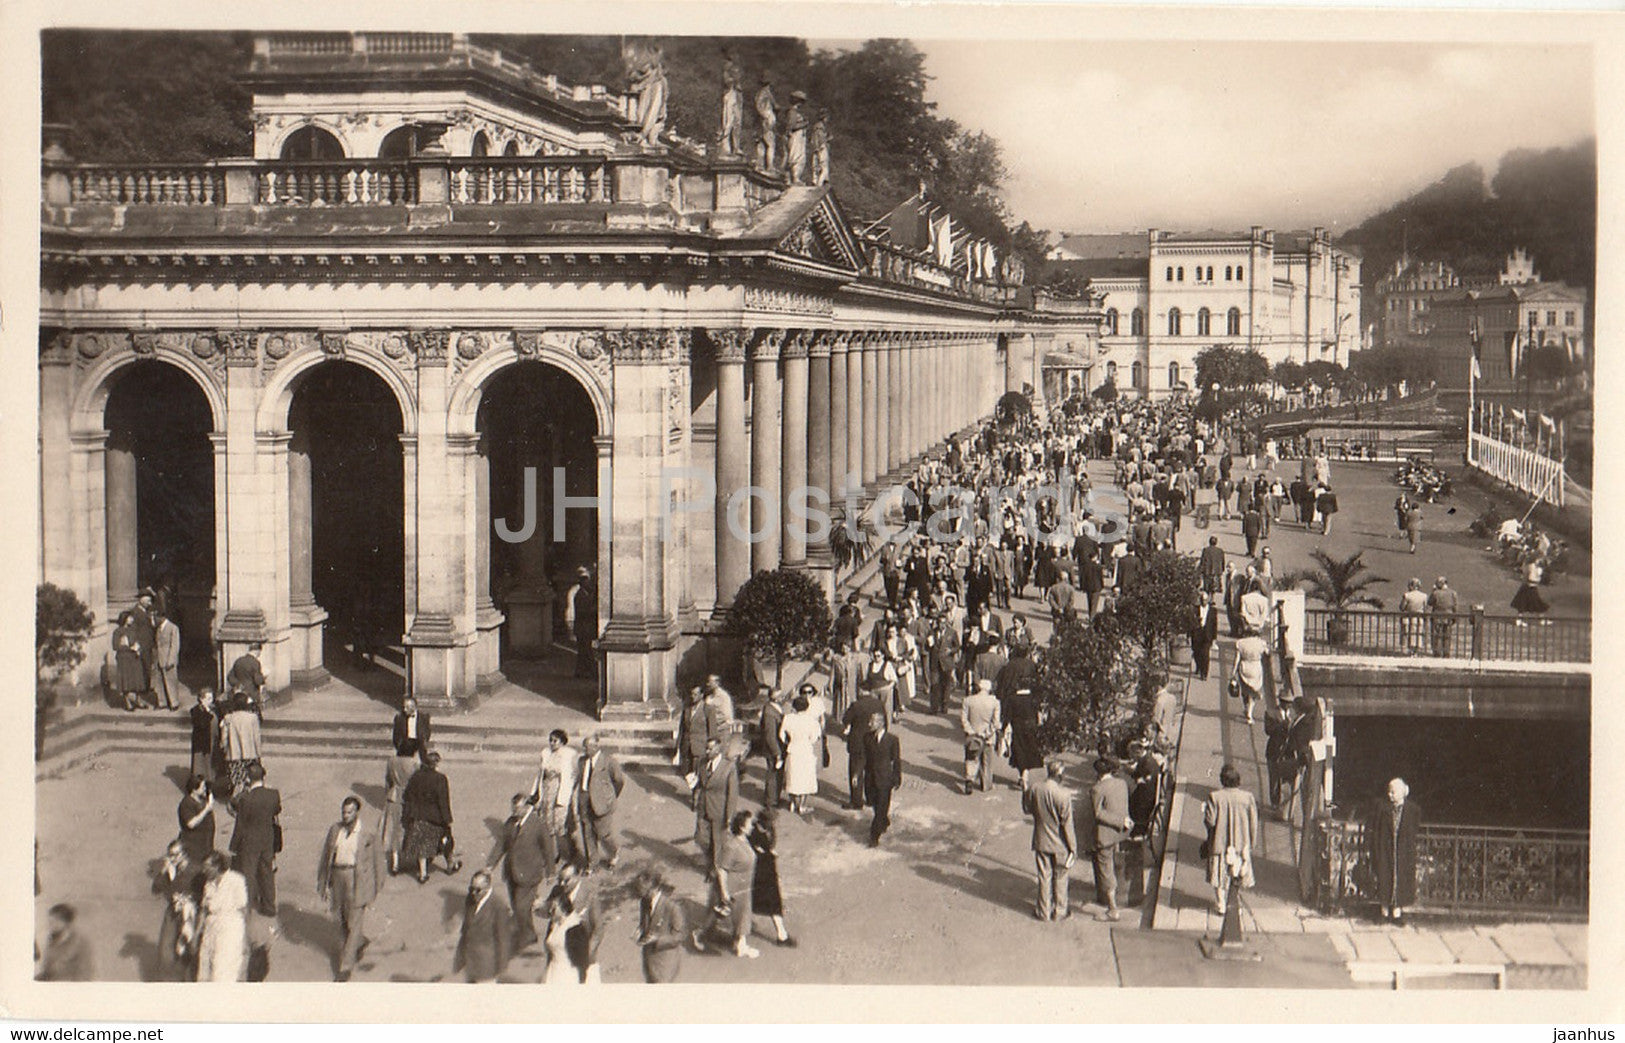 Karlovy Vary - Karlsbad - kolonada - Colonnade - 593 - old postcard - Czechoslovakia - Czech Republic - unused - JH Postcards